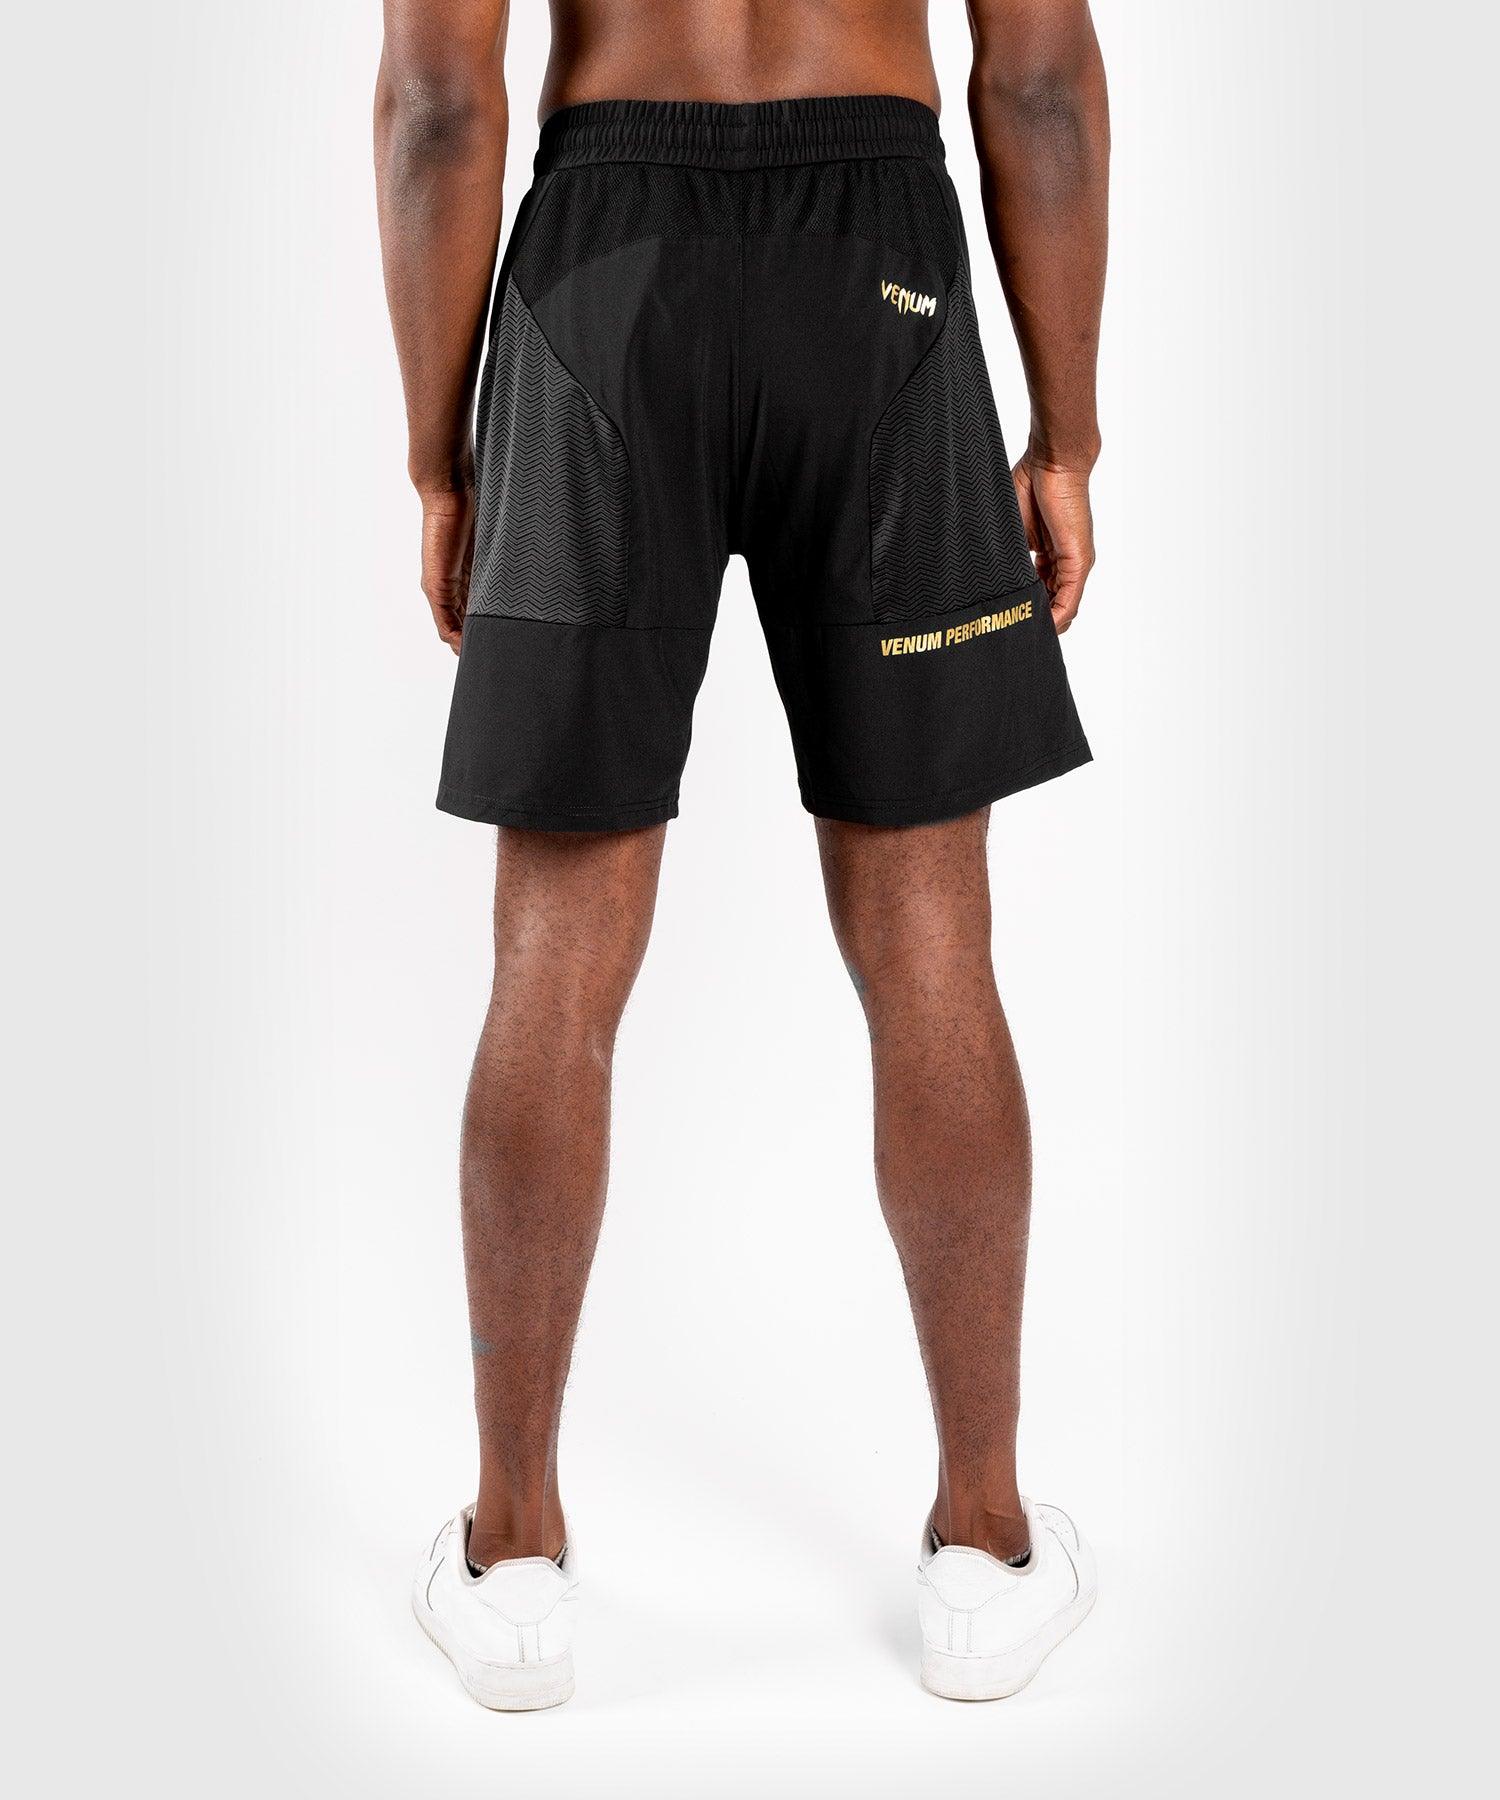 Venum G-Fit Training Shorts - Black/Gold Picture 2